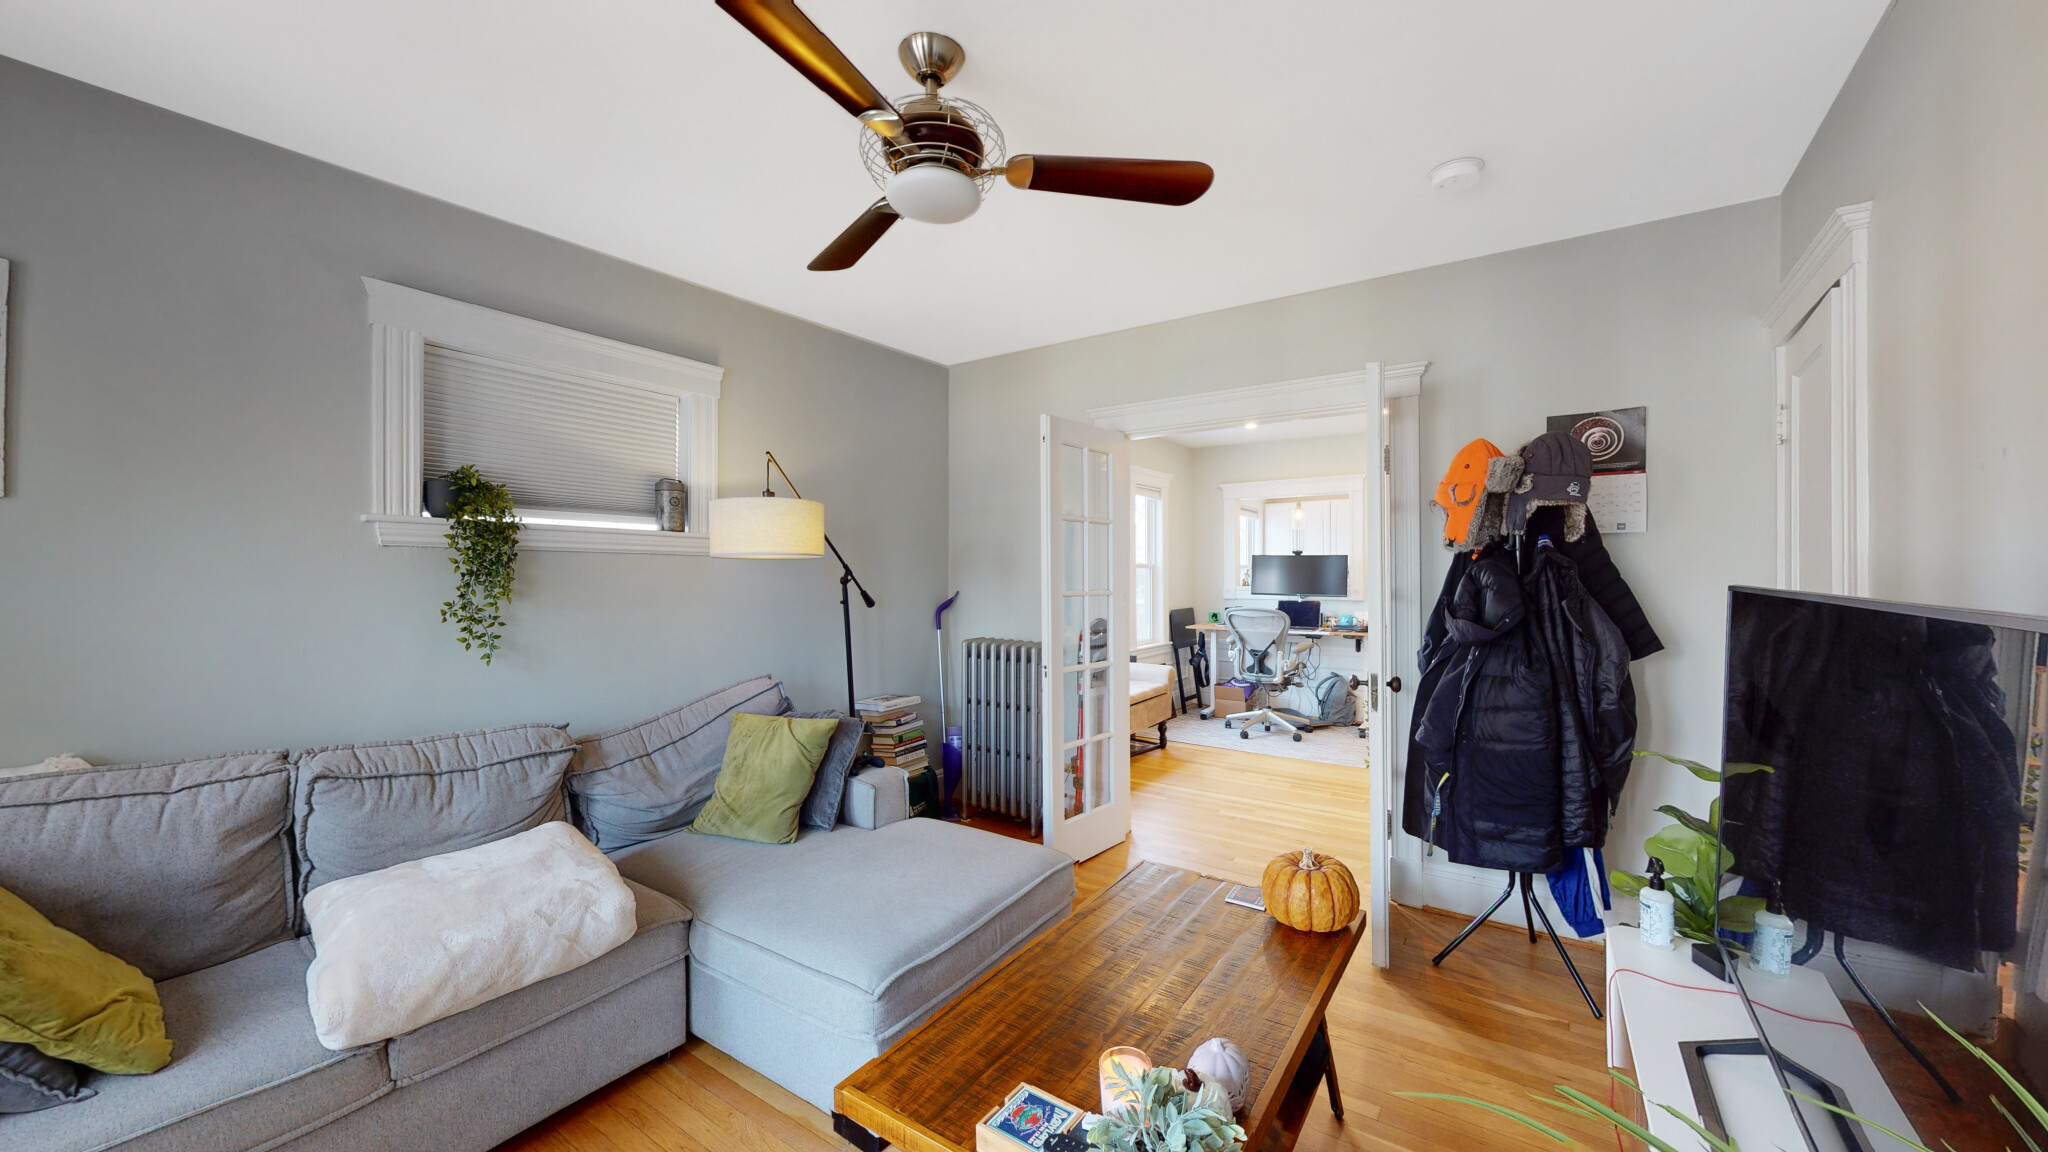 Photos of apartment on Lamartine,Boston MA 02130